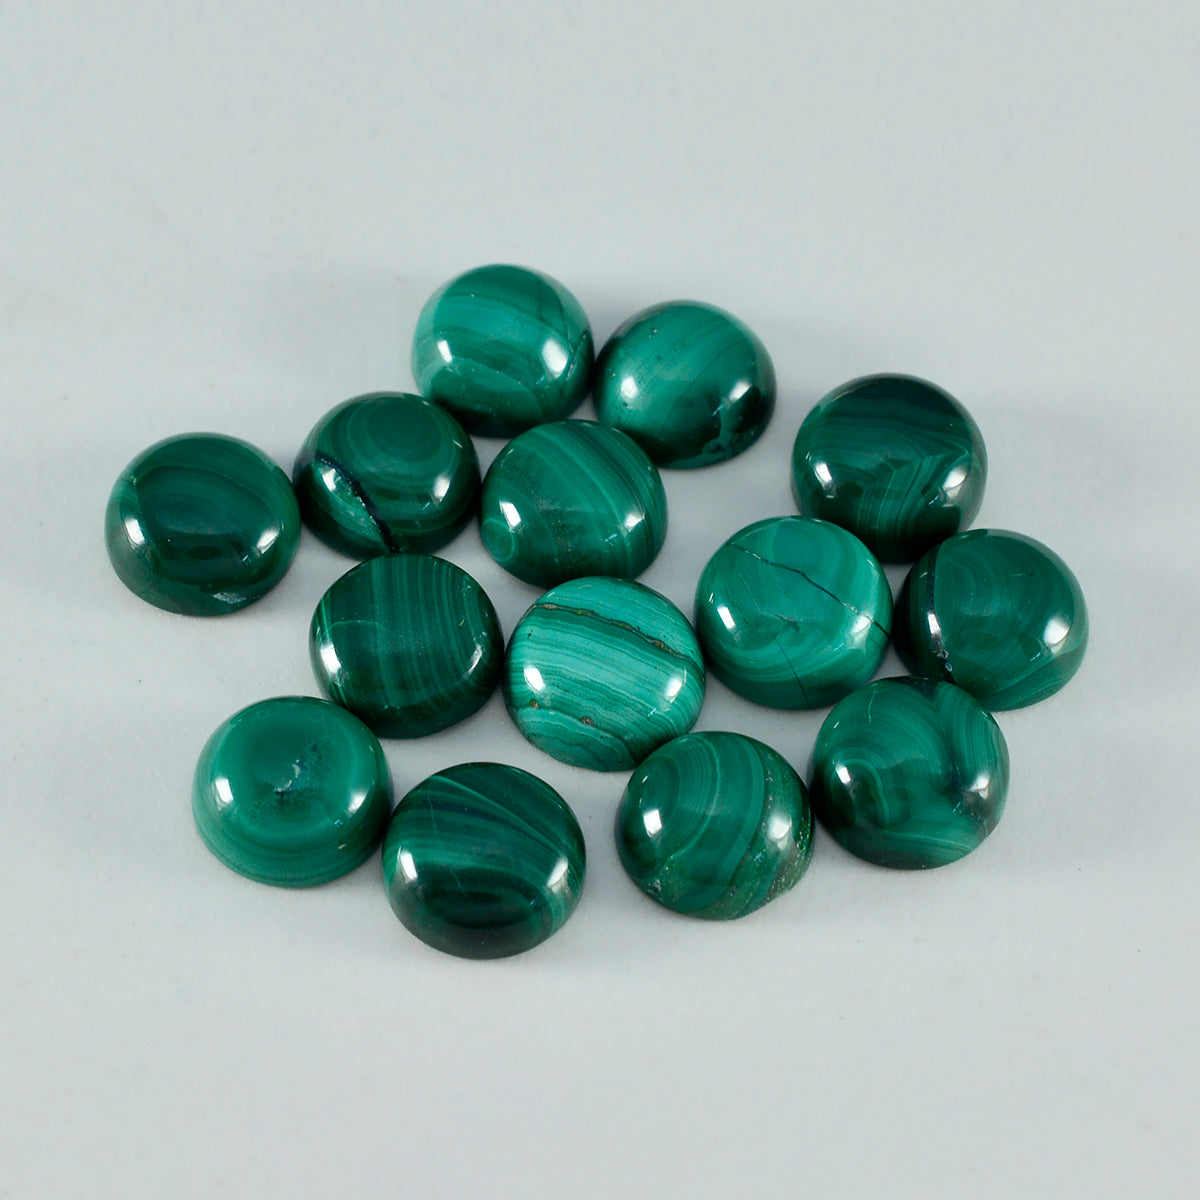 Riyogems 1PC Green Malachite Cabochon 8x8 mm Round Shape astonishing Quality Loose Stone